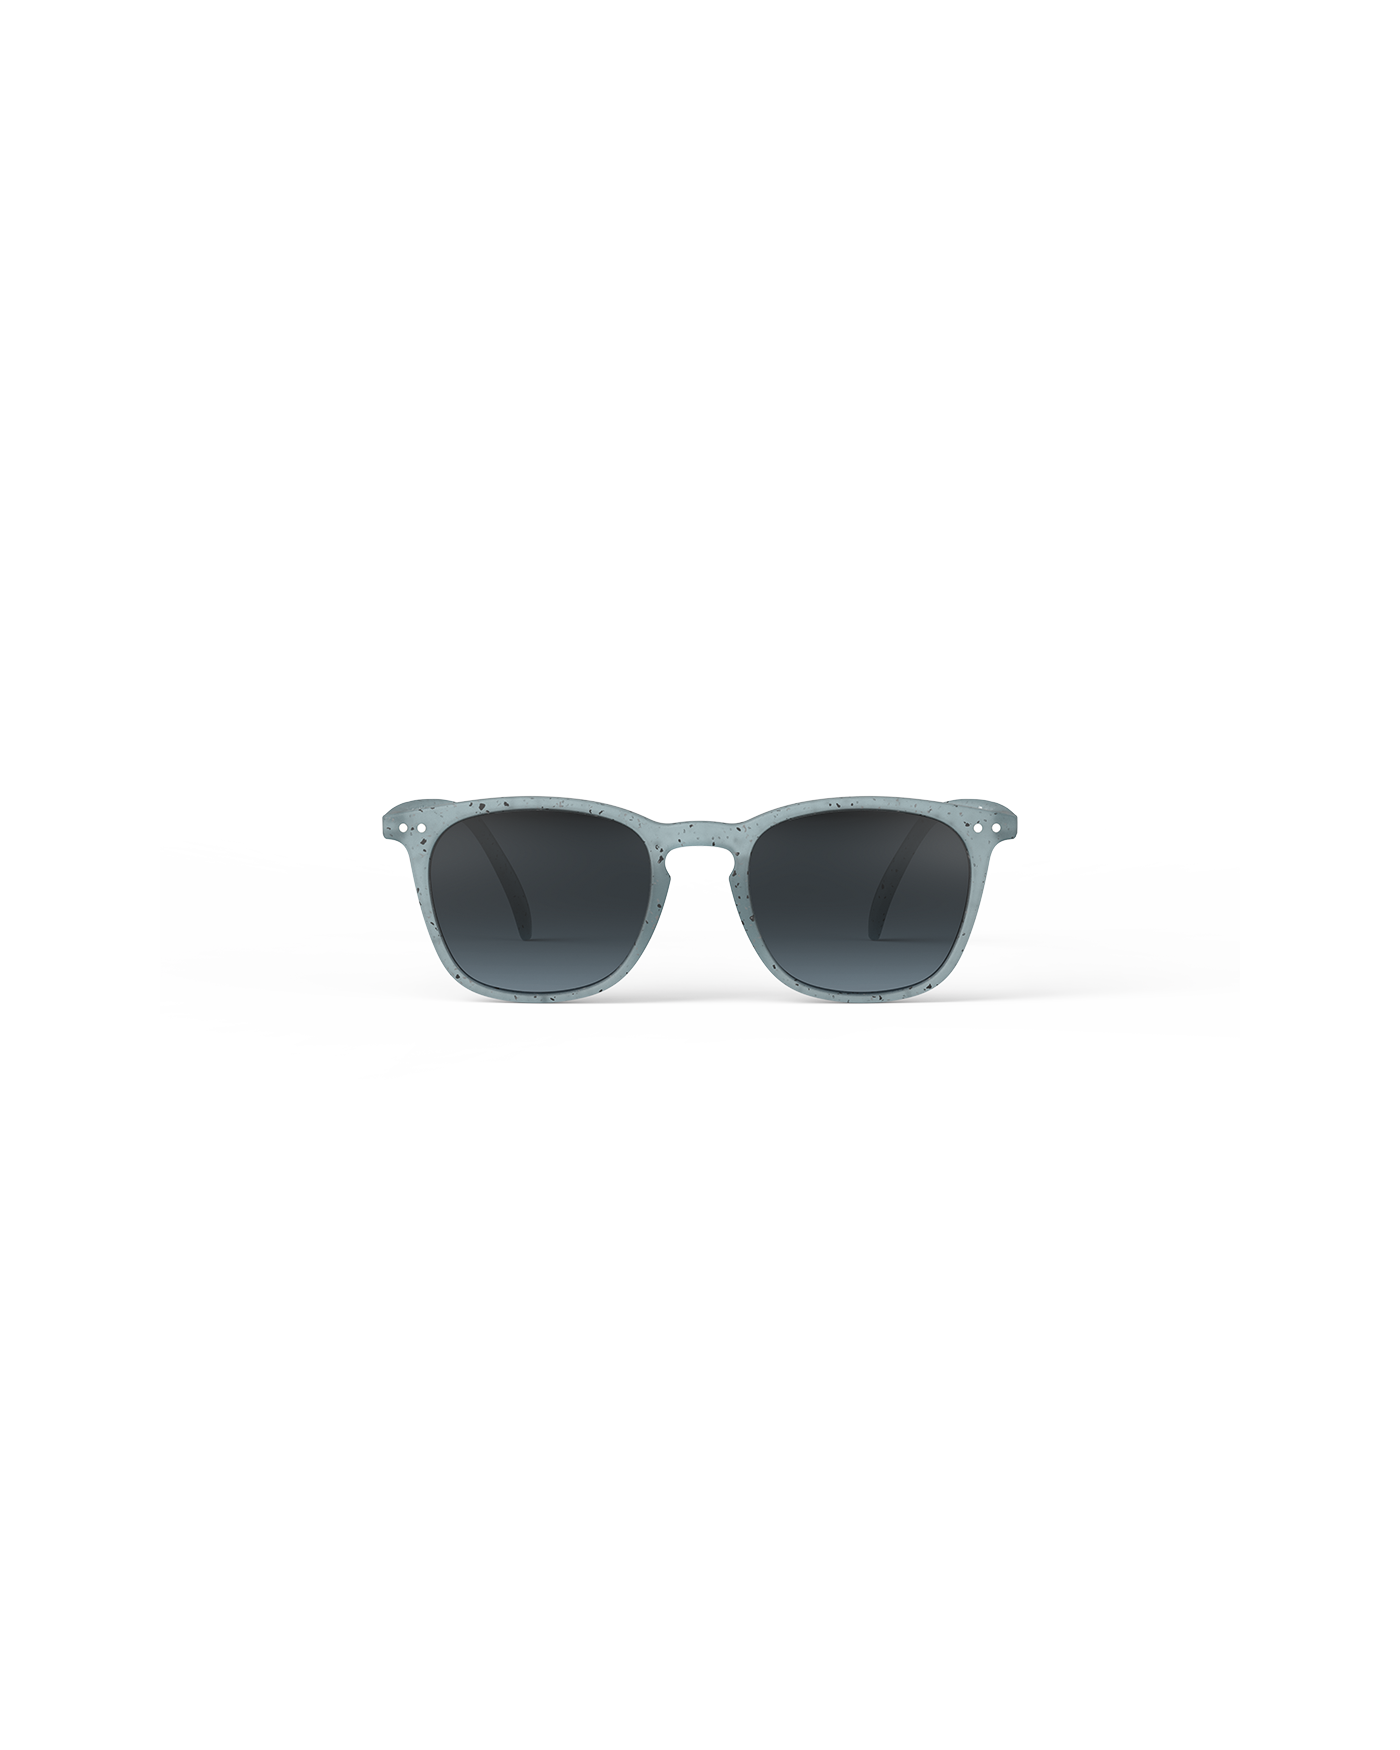 NEW Izipizi Sunglasses - #E Washed Denim